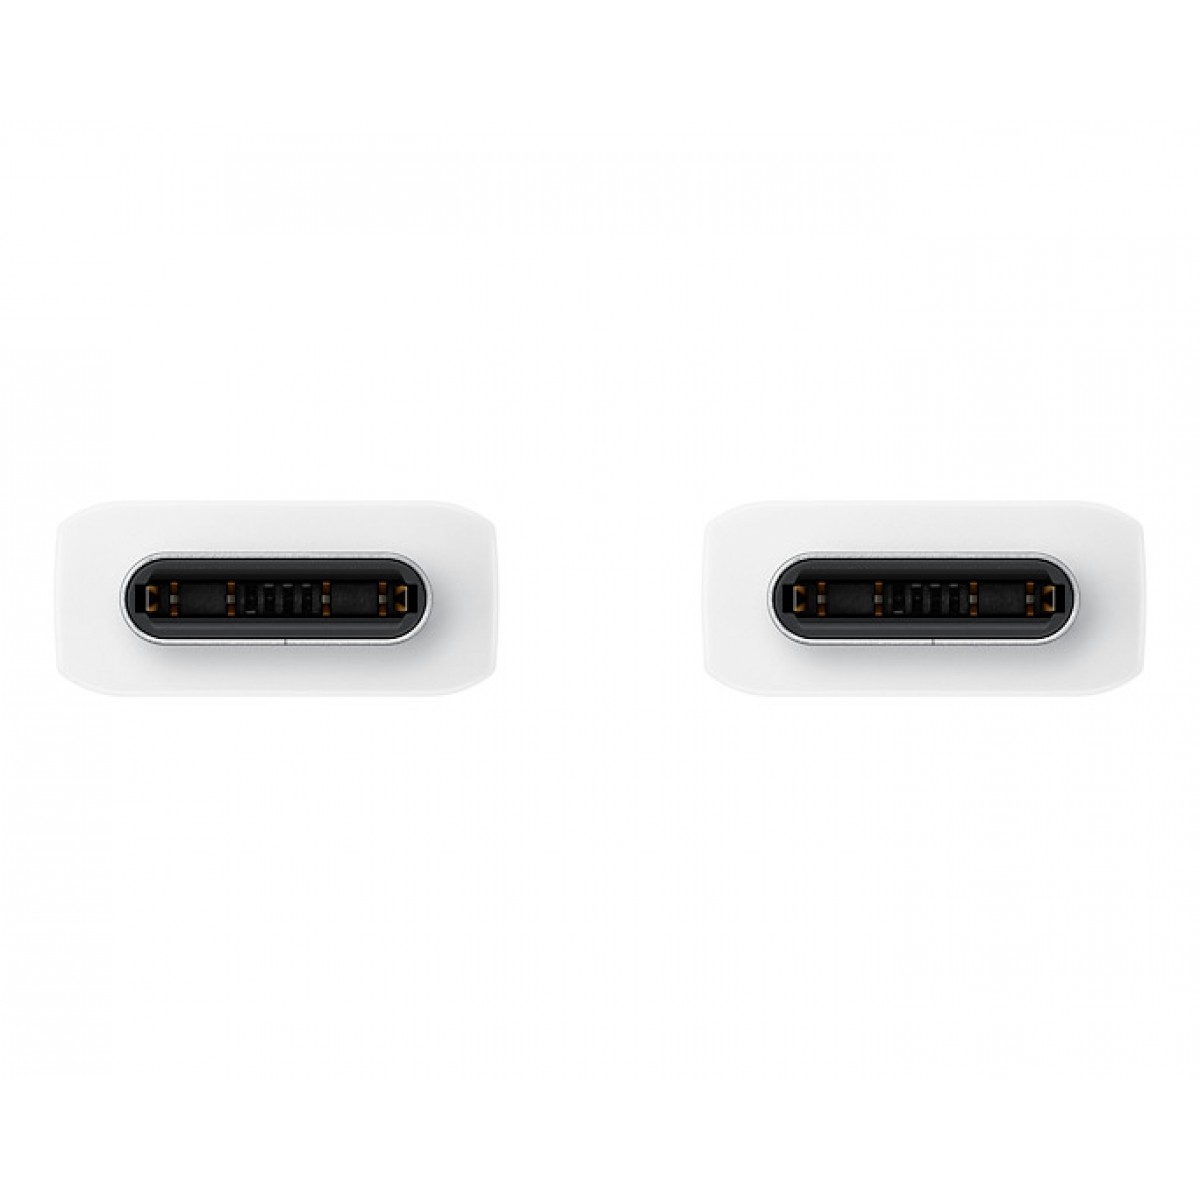 Samsung USB 2.0 Cable USB-C male - USB-C male Λευκό 1.8m (EP-DX310JWEGEU) 3A